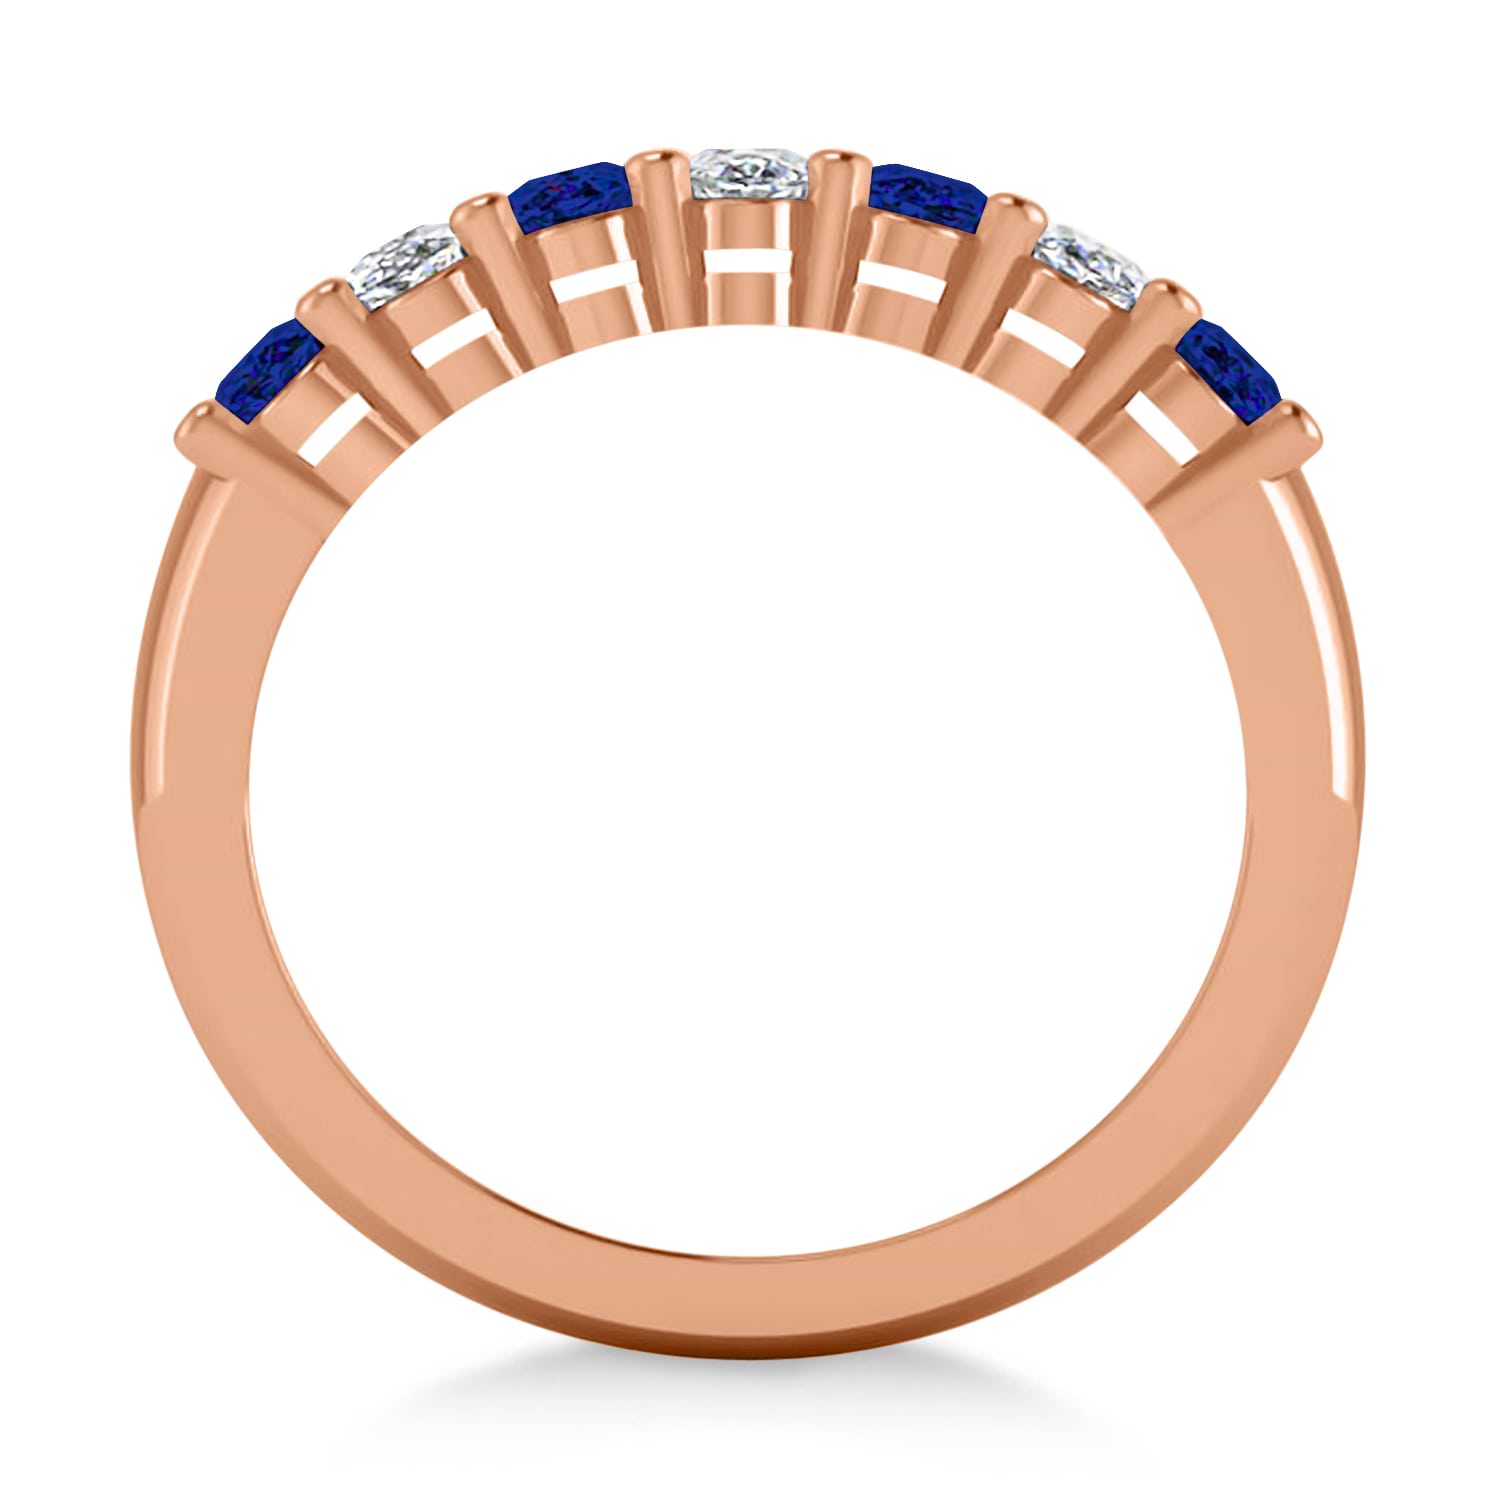 Oval Diamond & Blue Sapphire Seven Stone Ring 14k Rose Gold (2.15ct)